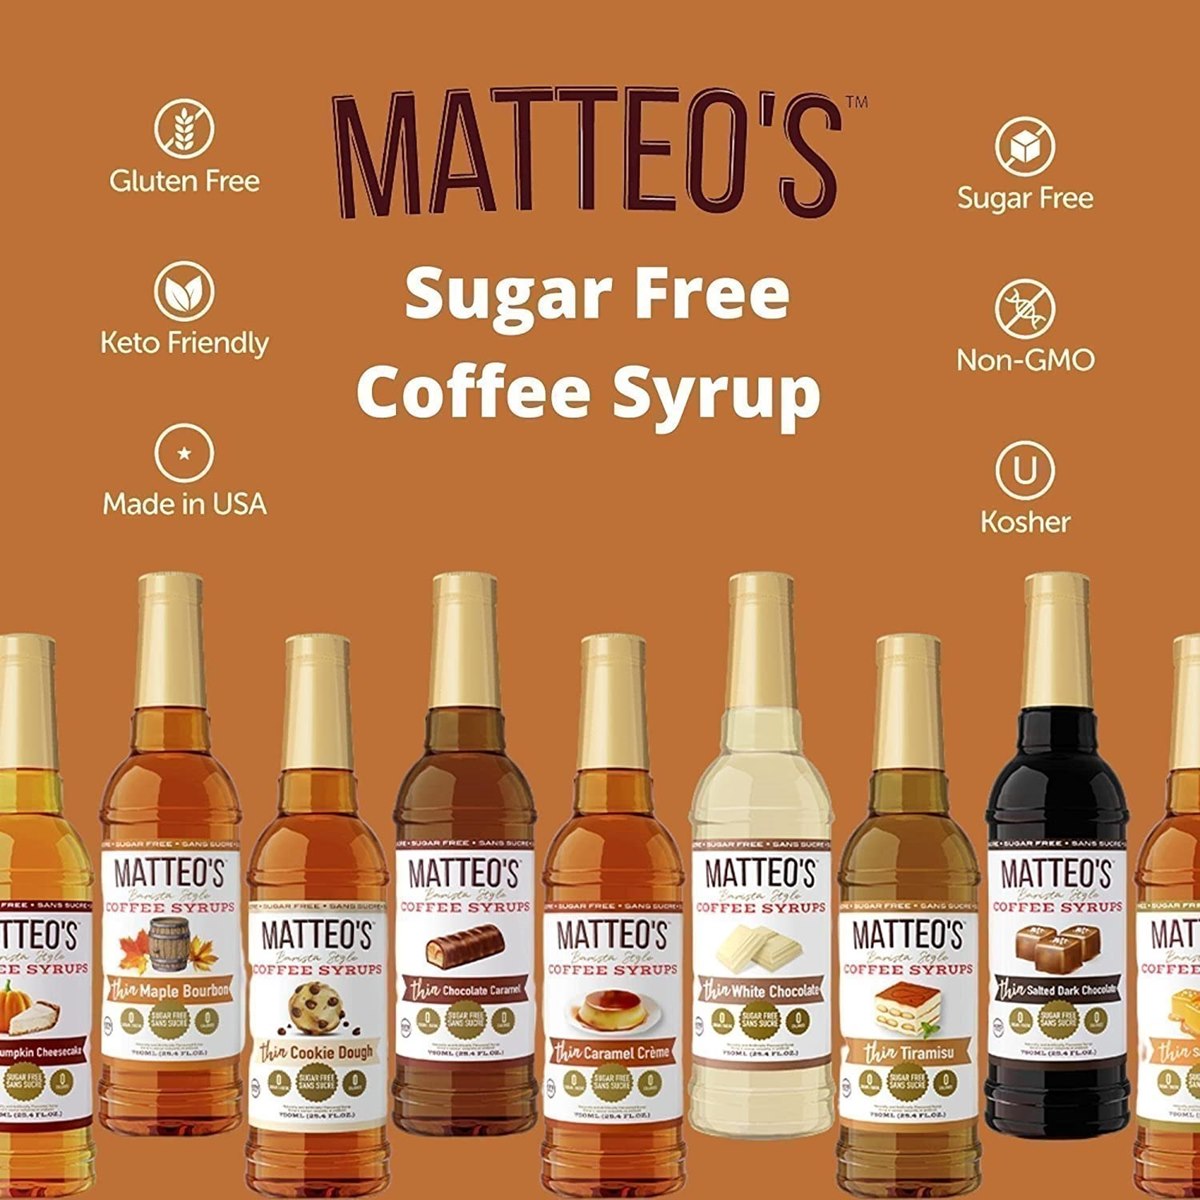 Matteos Sugar Free Coffee Syrup